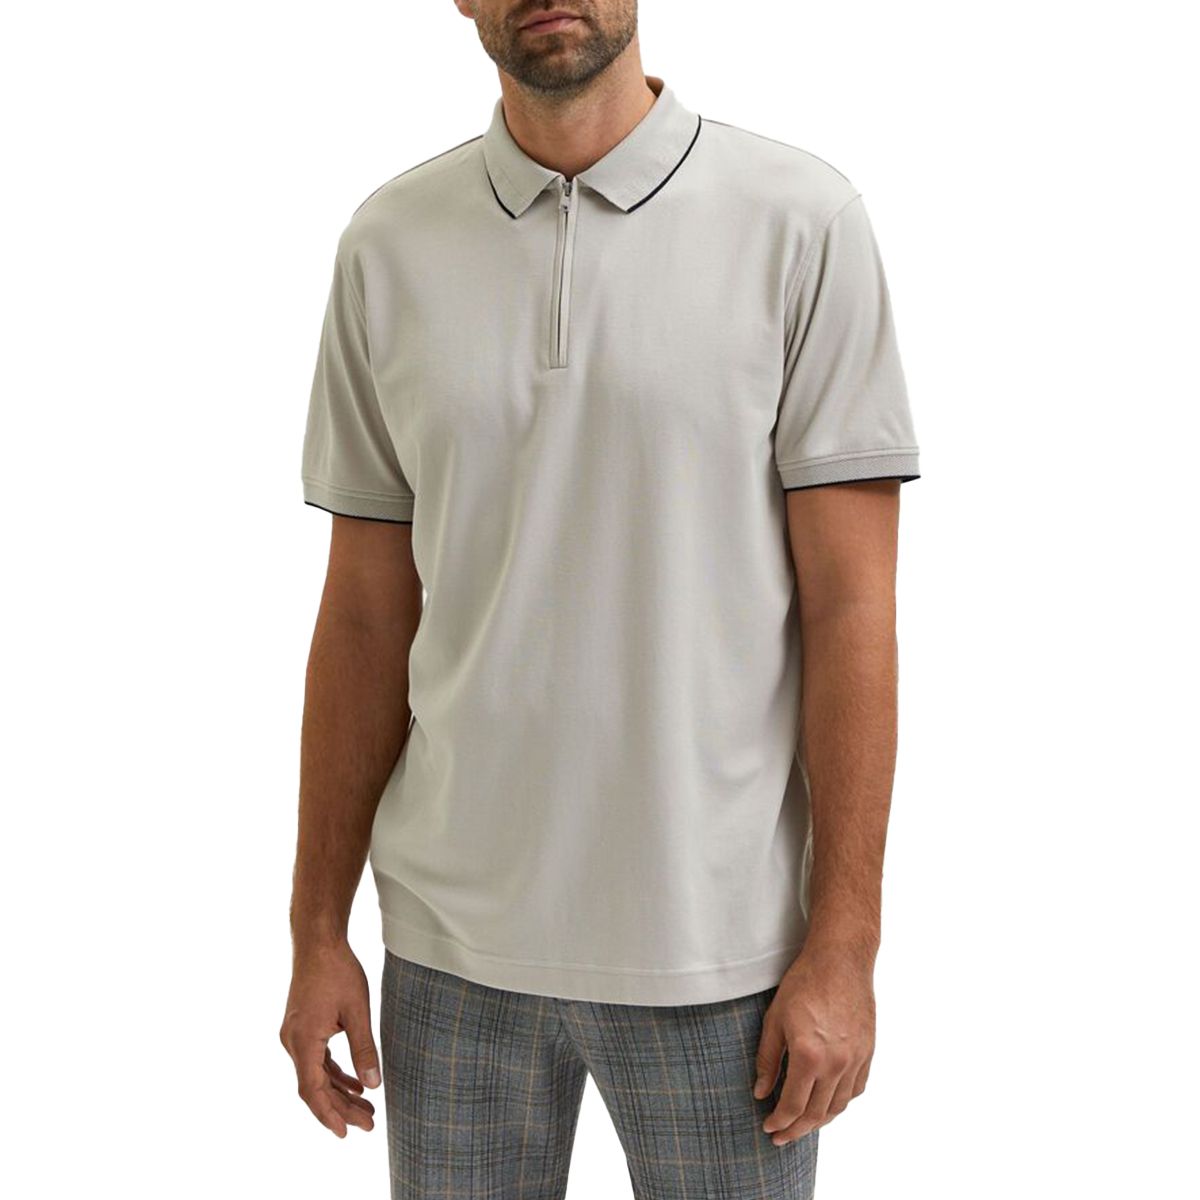 Quorter Zip Polo Shirt